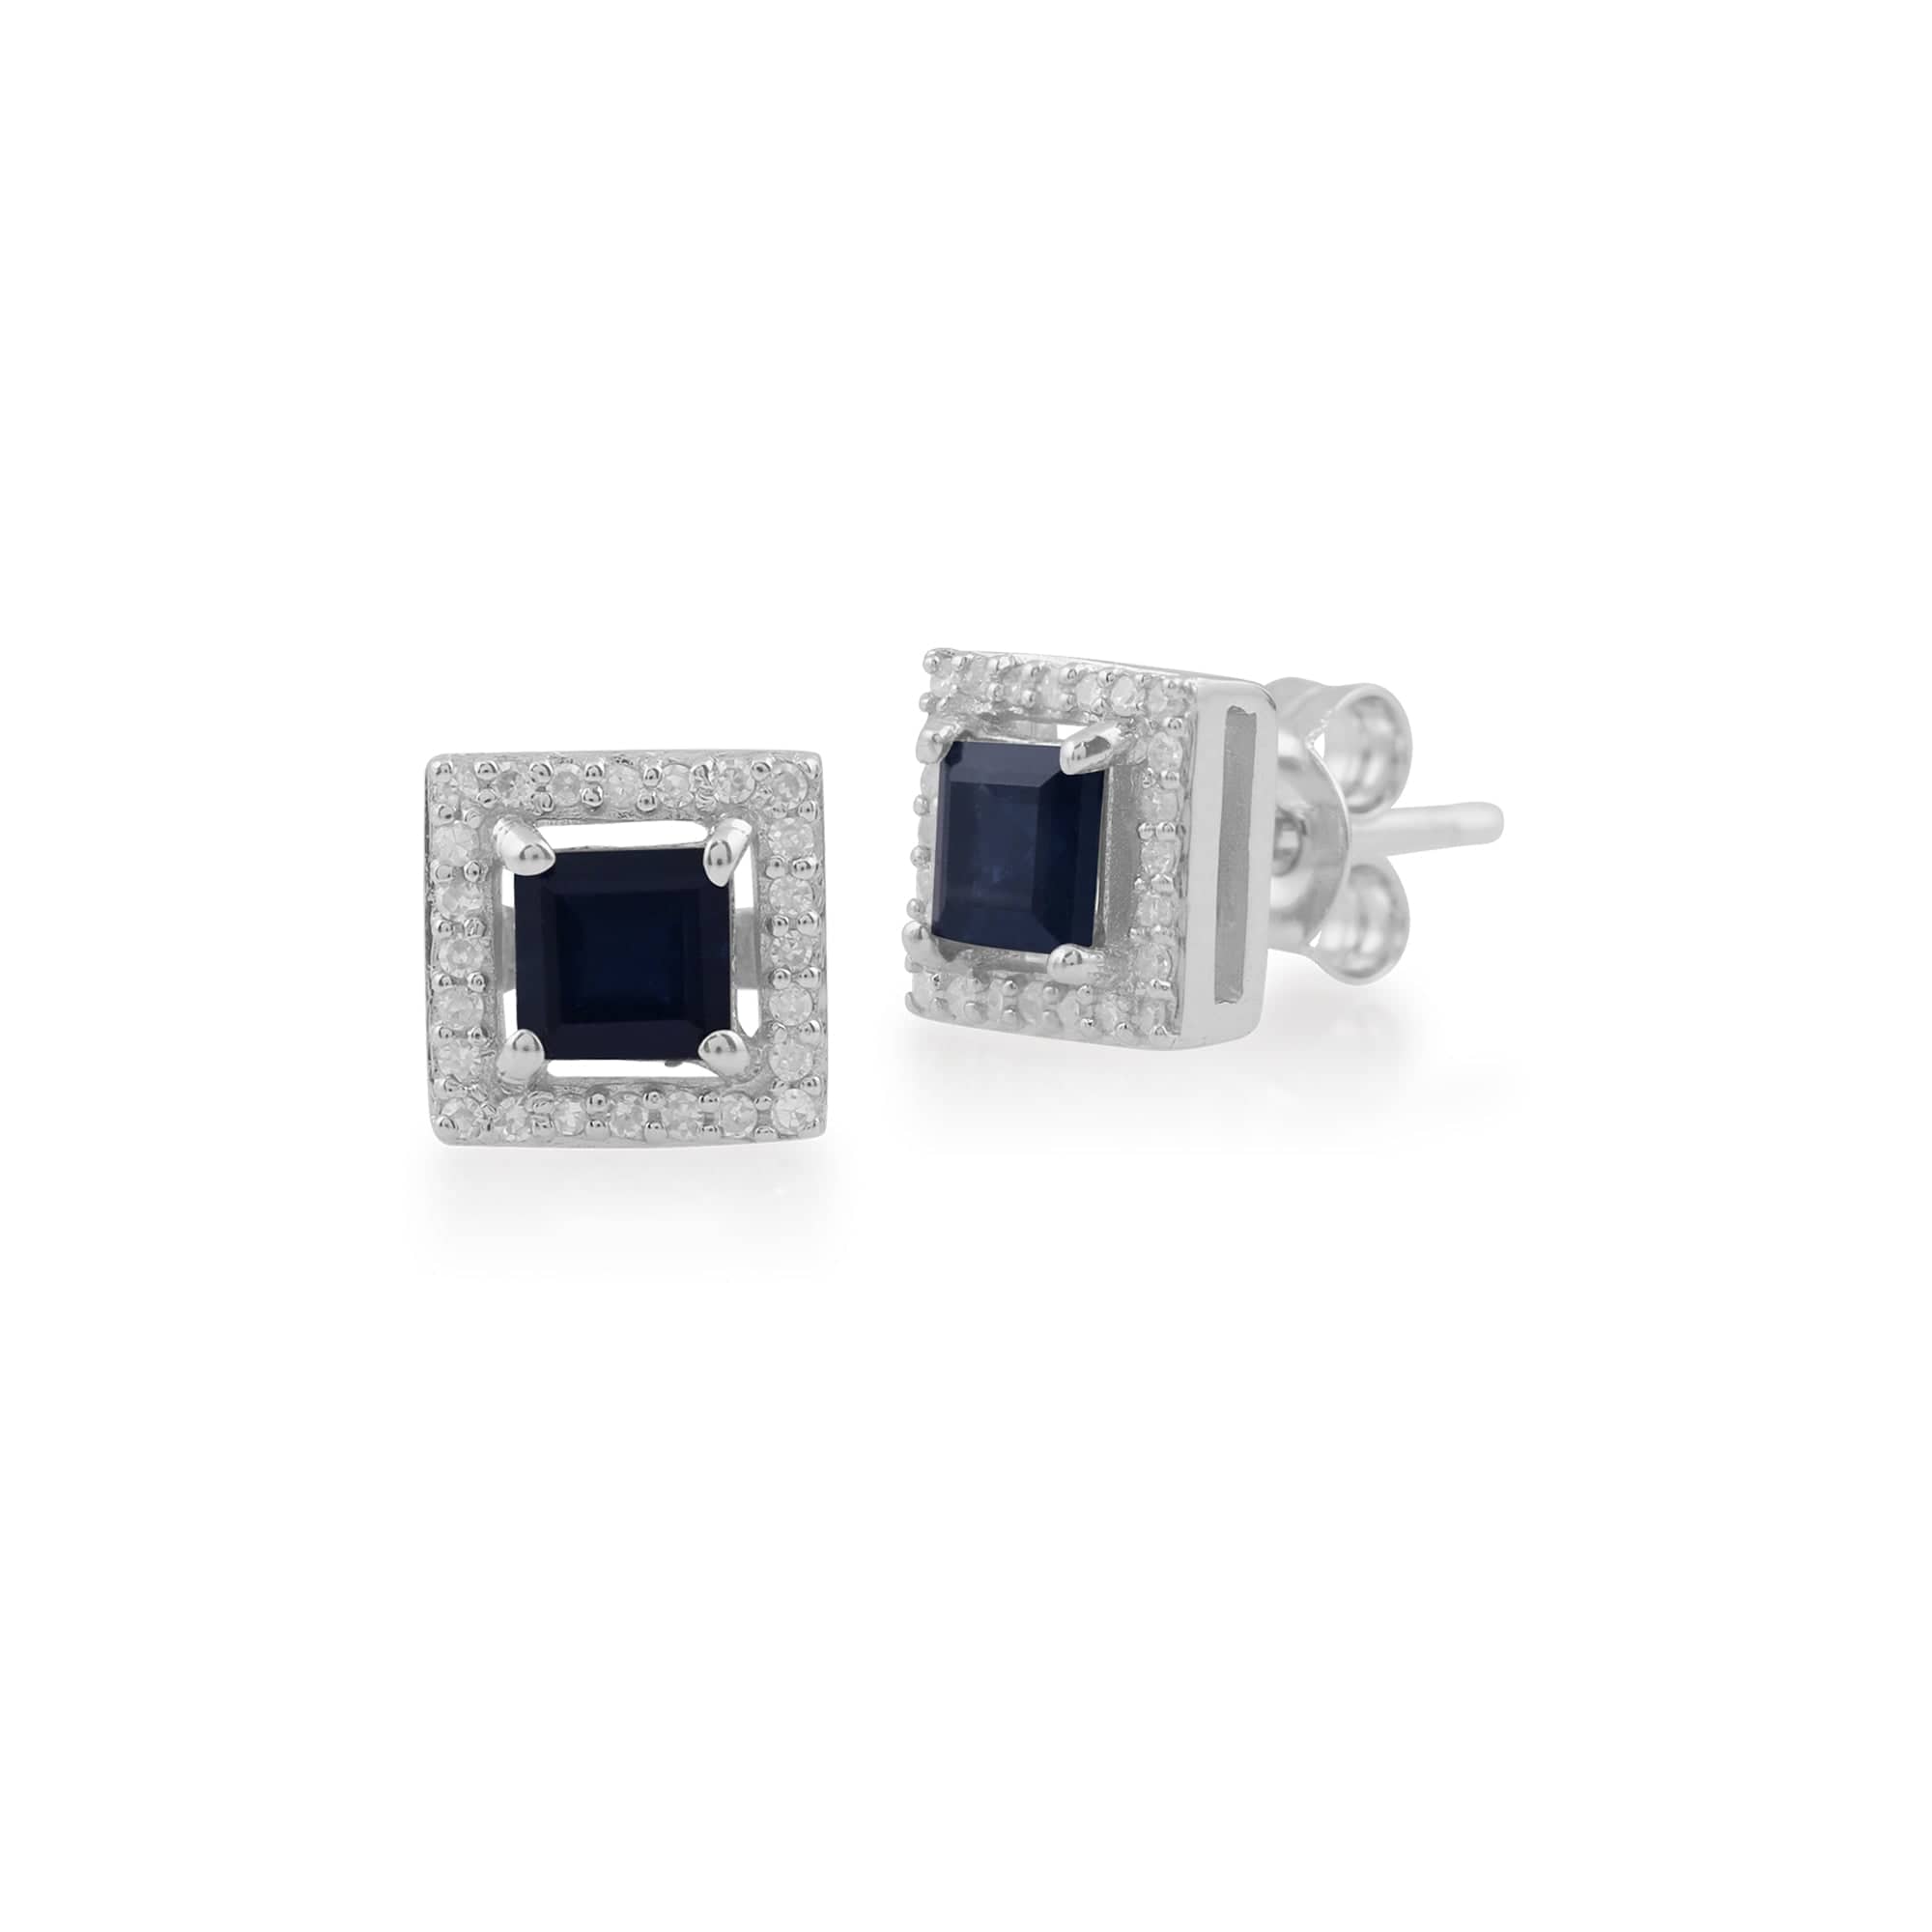 Gemondo 9ct White Gold 0.68ct Sapphire & Diamond Square Stud Earrings